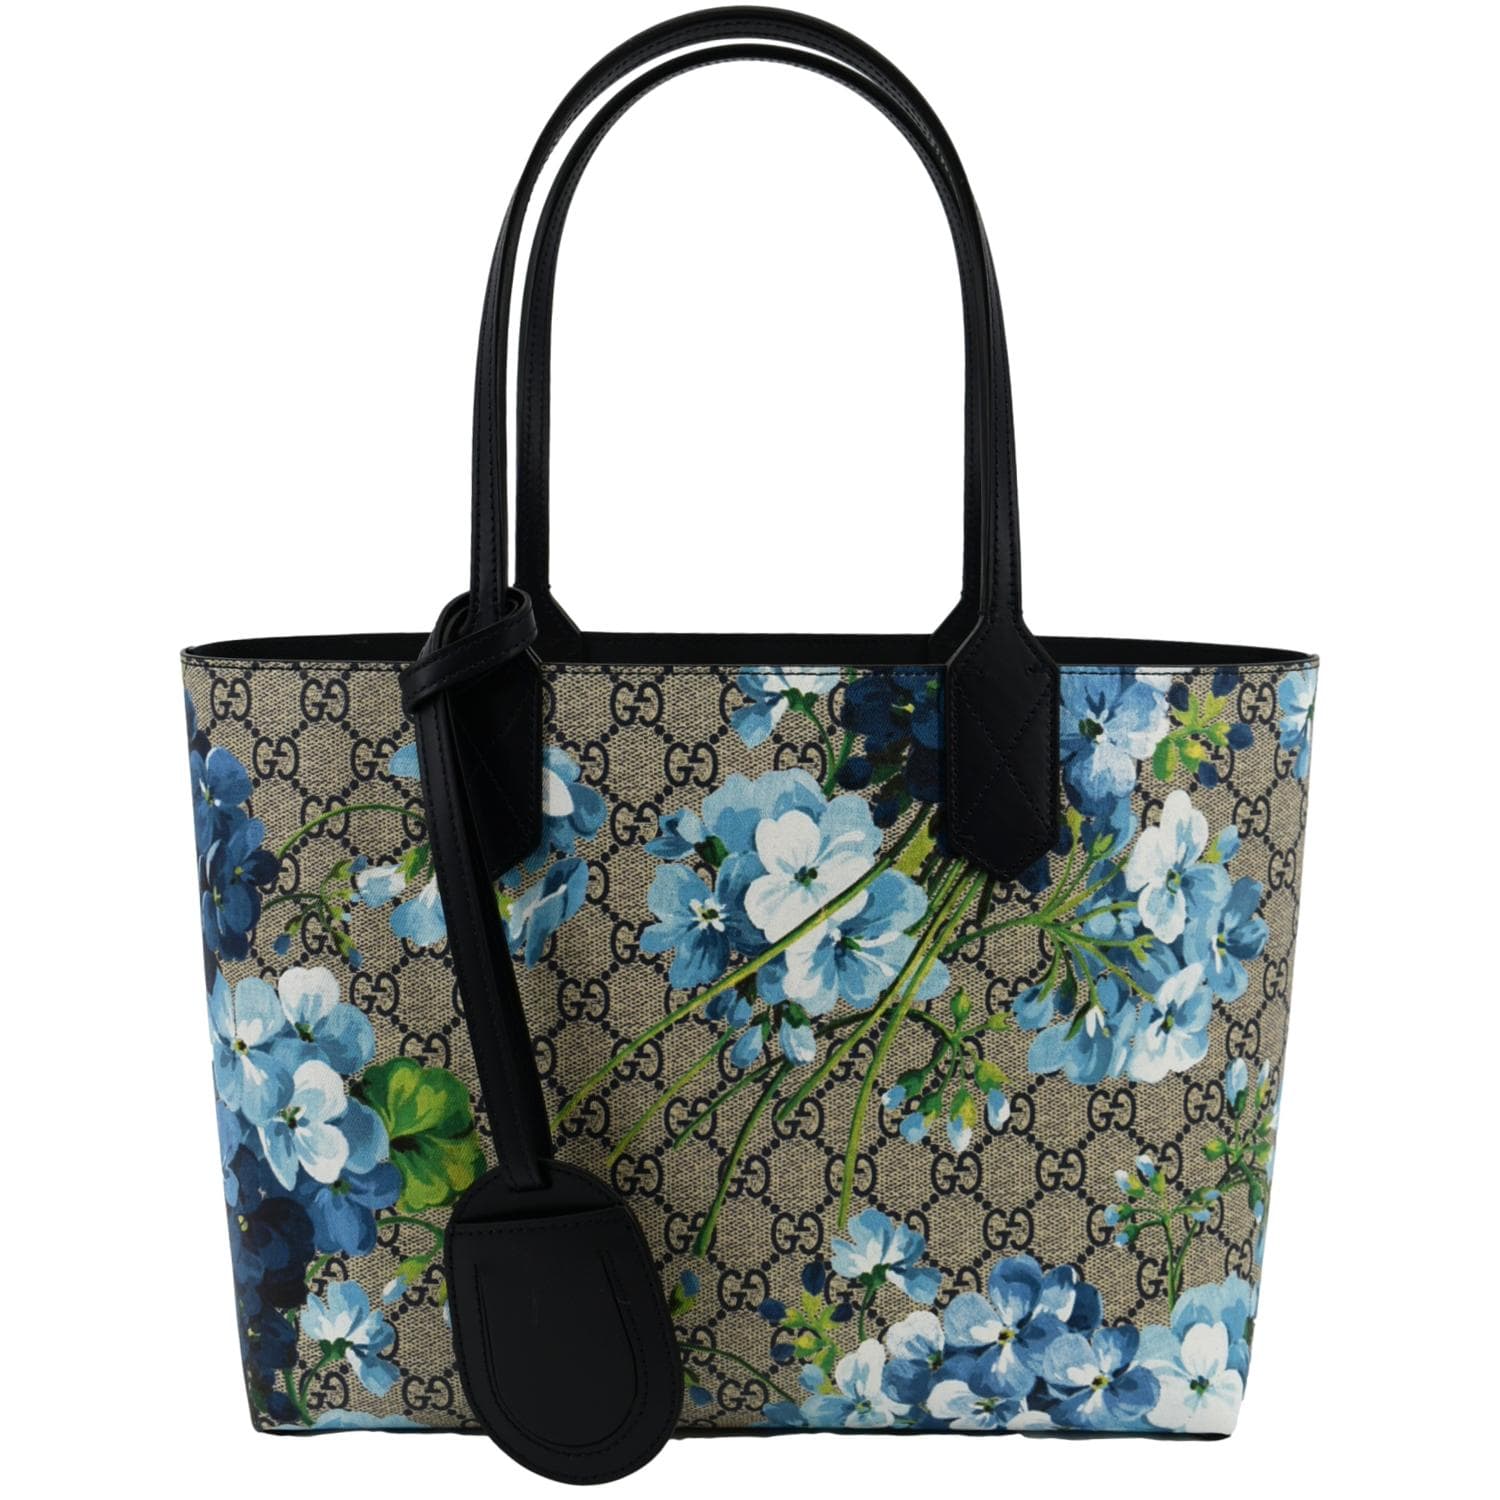 Gucci Blooms GG Print Floral Tote Bag